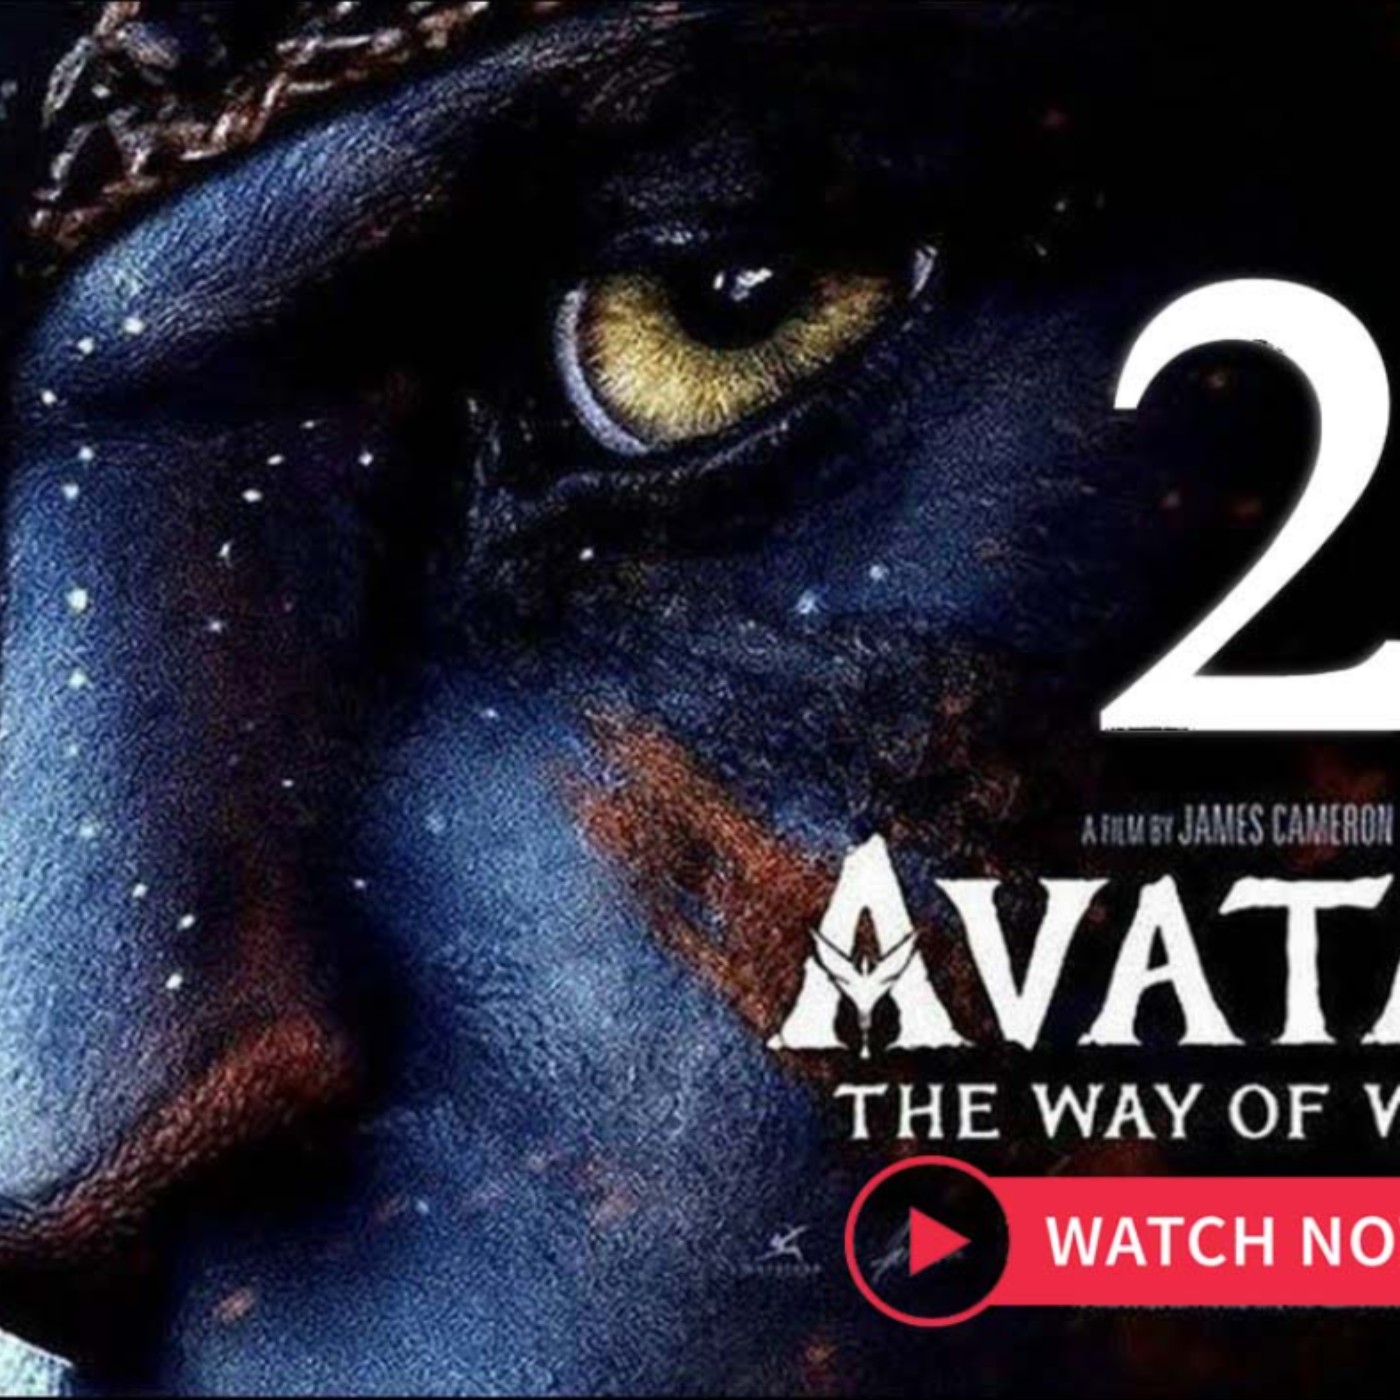 Download123𝘮ovies Avatar 2 The Way of Water 2022 FullMovie Free  MP4720p 1080p HD 4K EngSub  Monhorloger